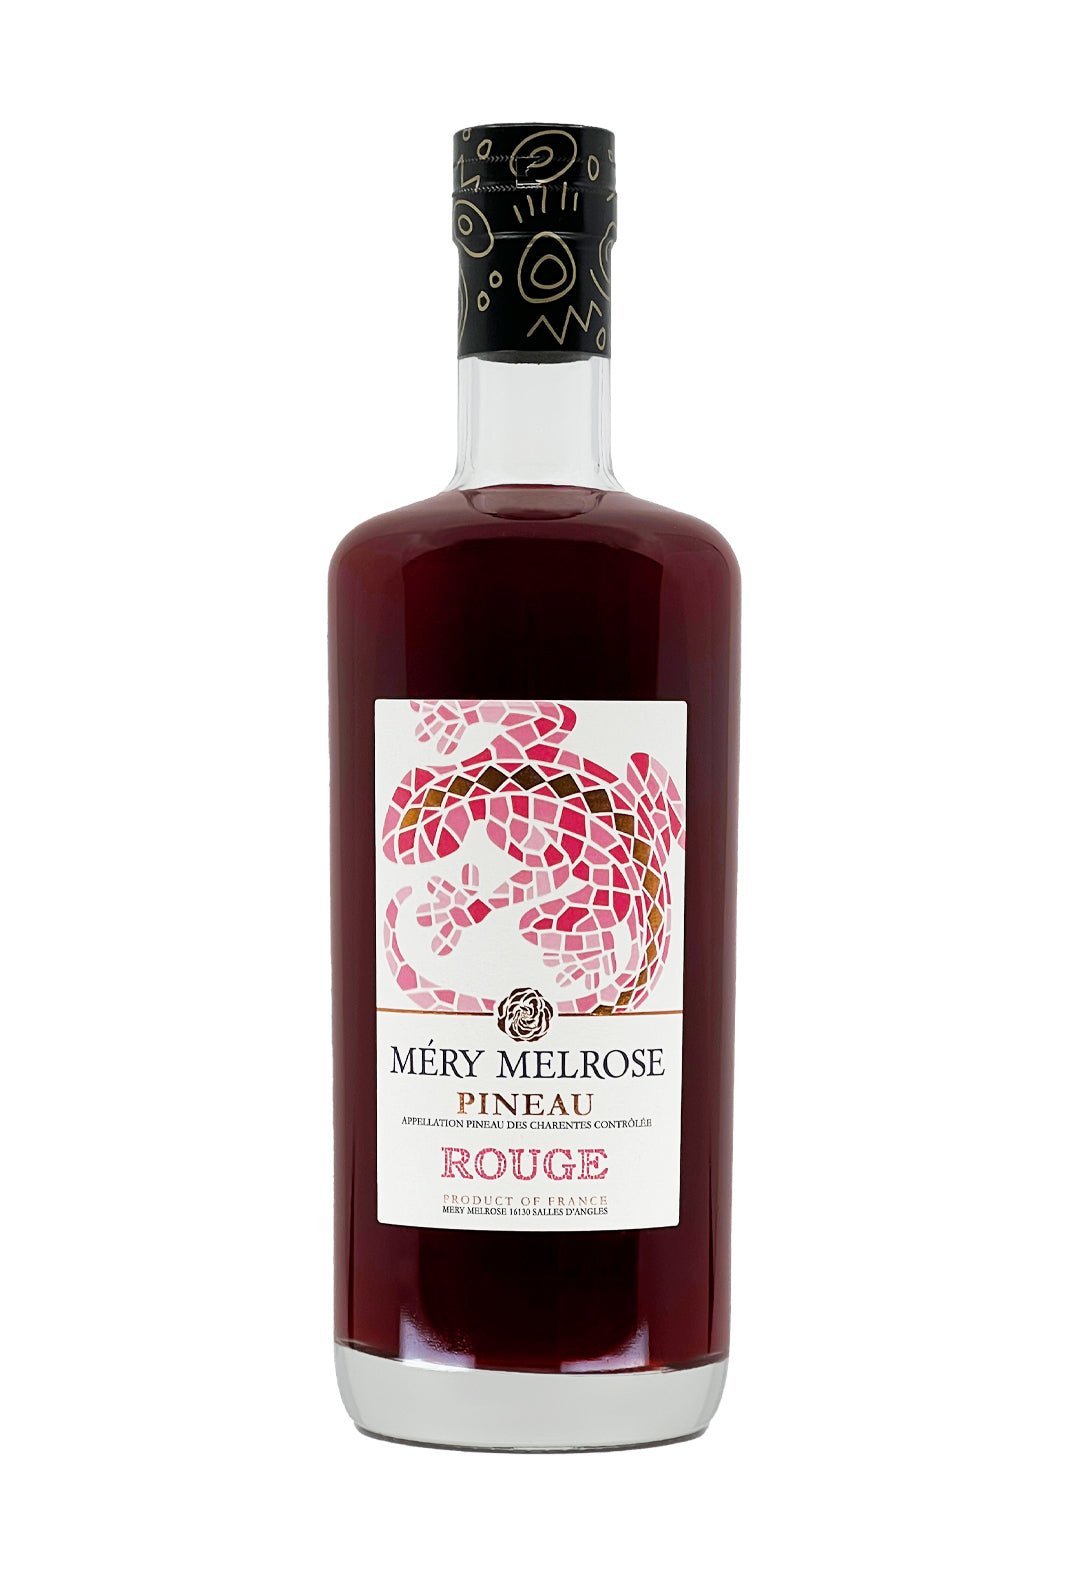 Mery Melrose Pineau des Charentes Rouge (Red) Organic 16.5% 750ml | Liquor & Spirits | Shop online at Spirits of France